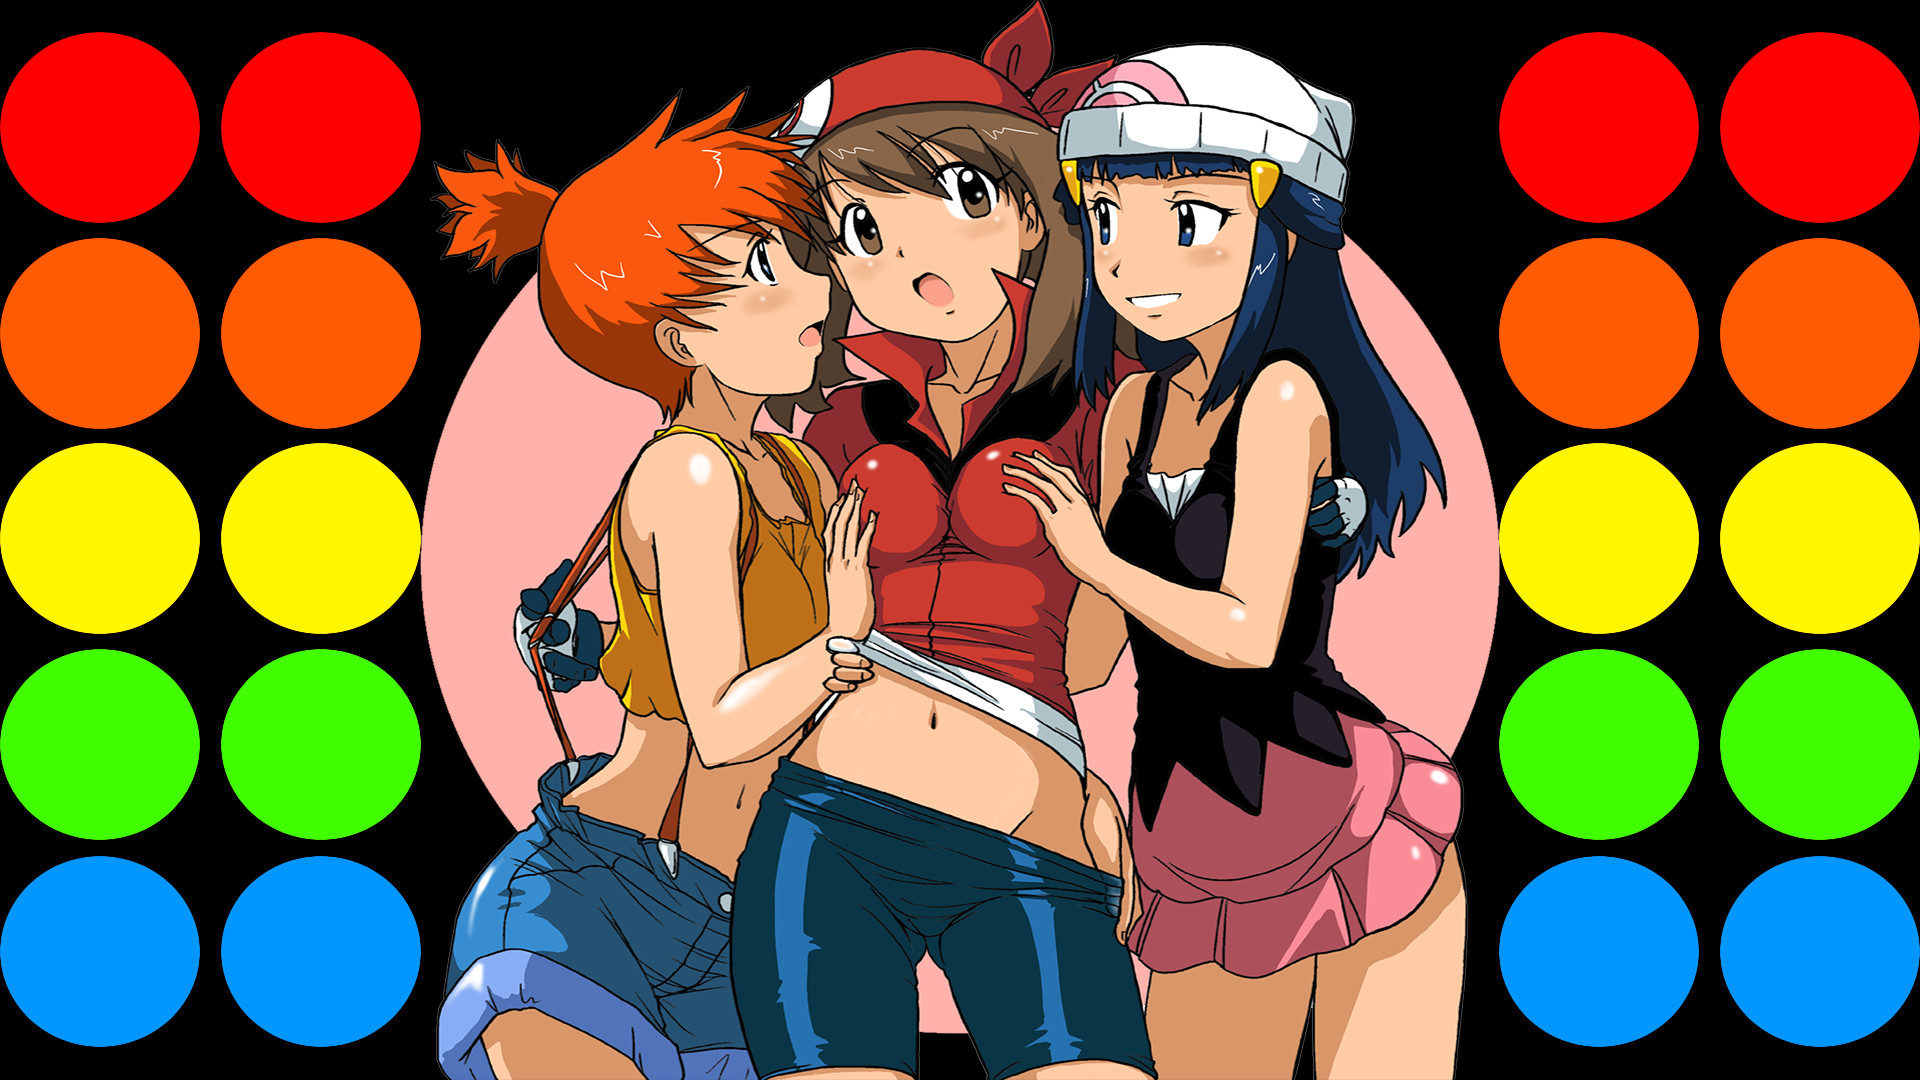 Free Download Misty Pokemon Anime Desktop Wallpaper Download Misty Pokemon Anime 2560x1600 For